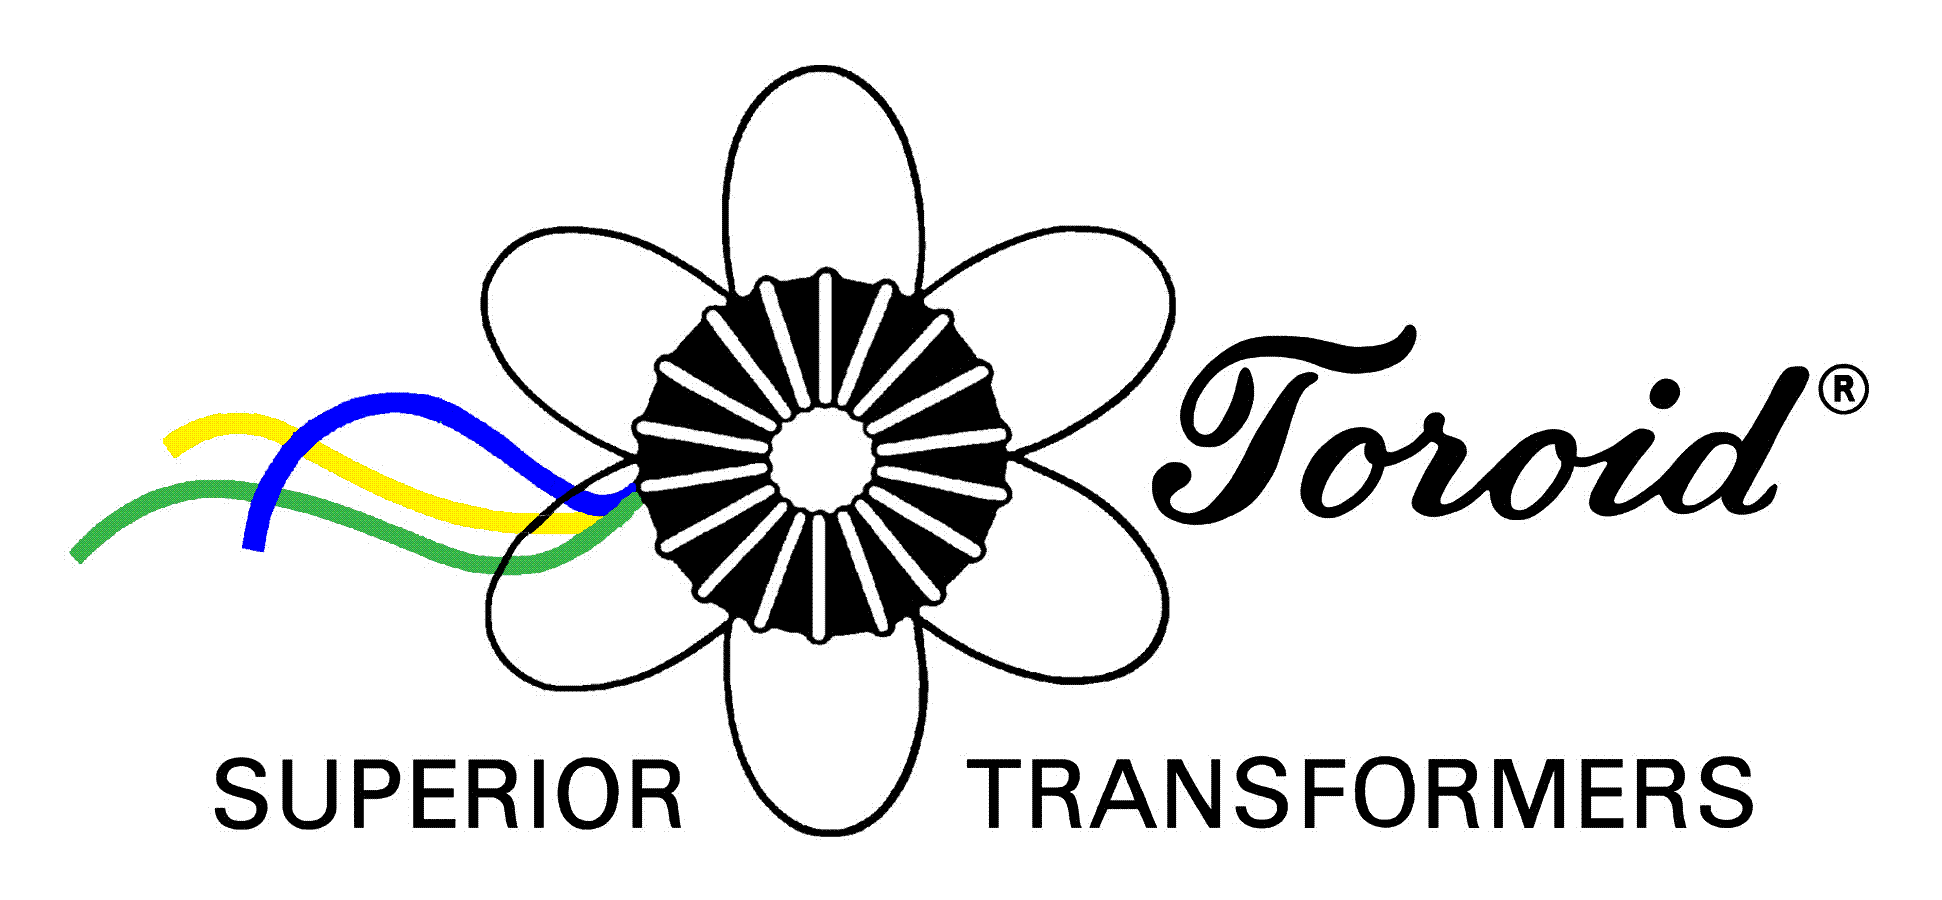 Toroid Corporation of Maryland